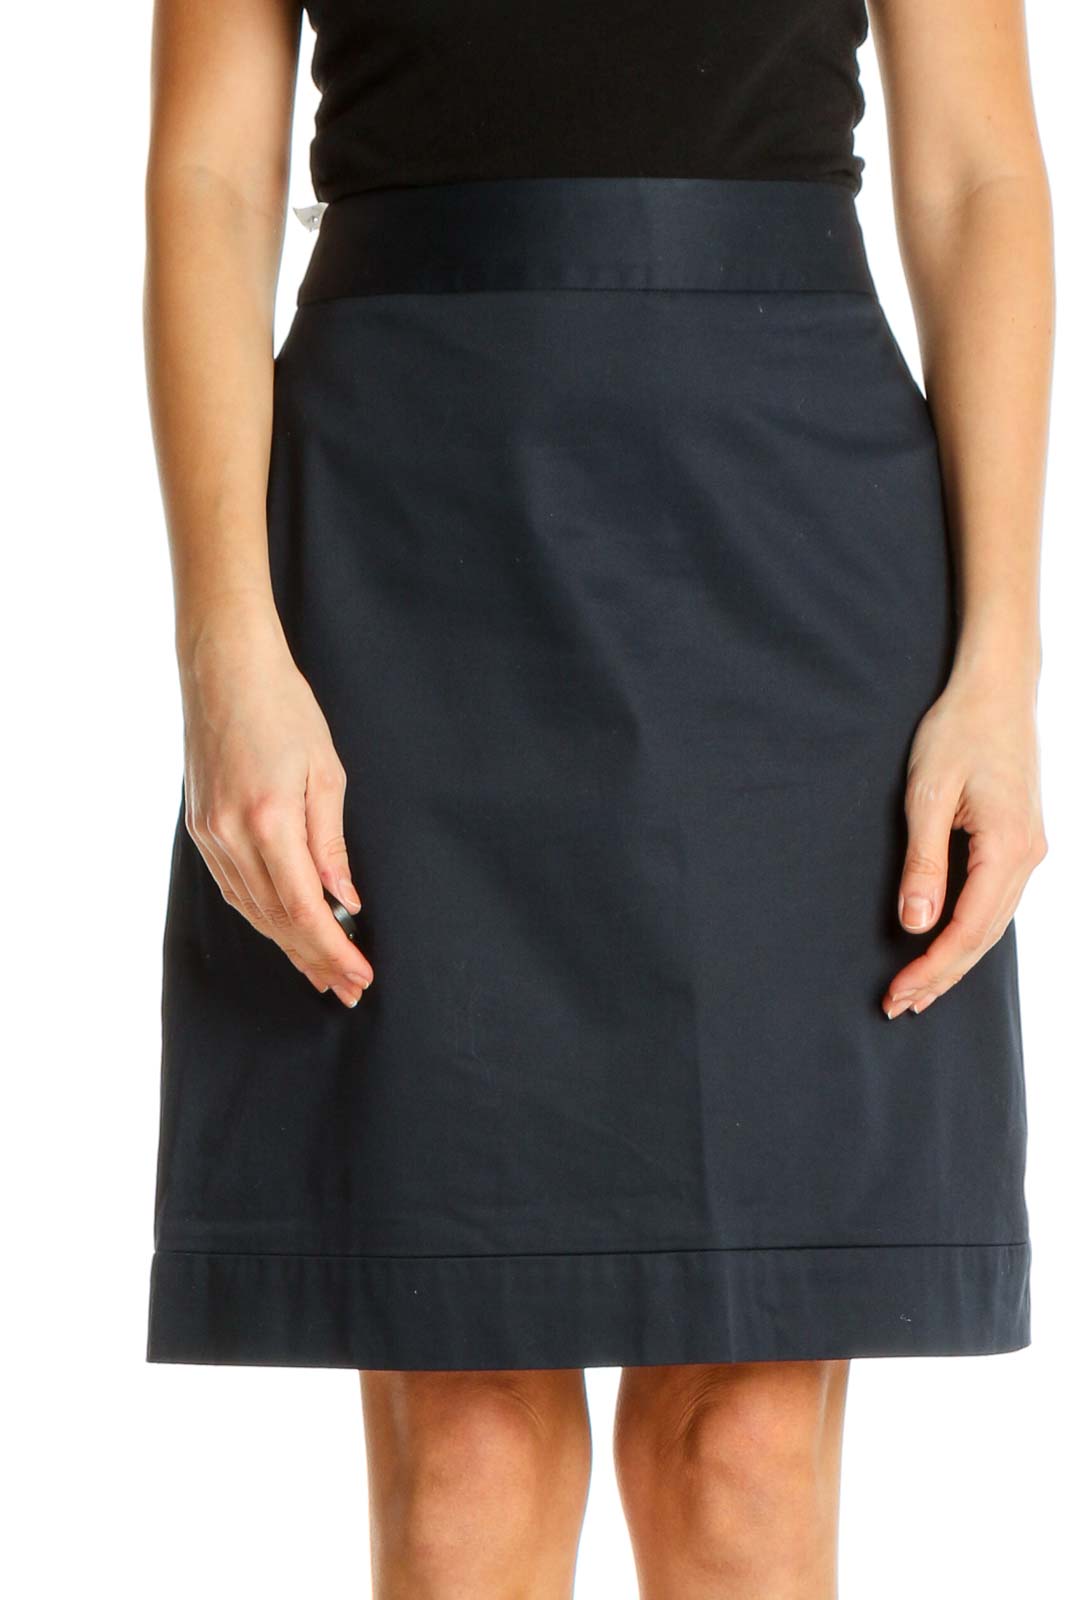 Blue Brunch A-Line Skirt Front